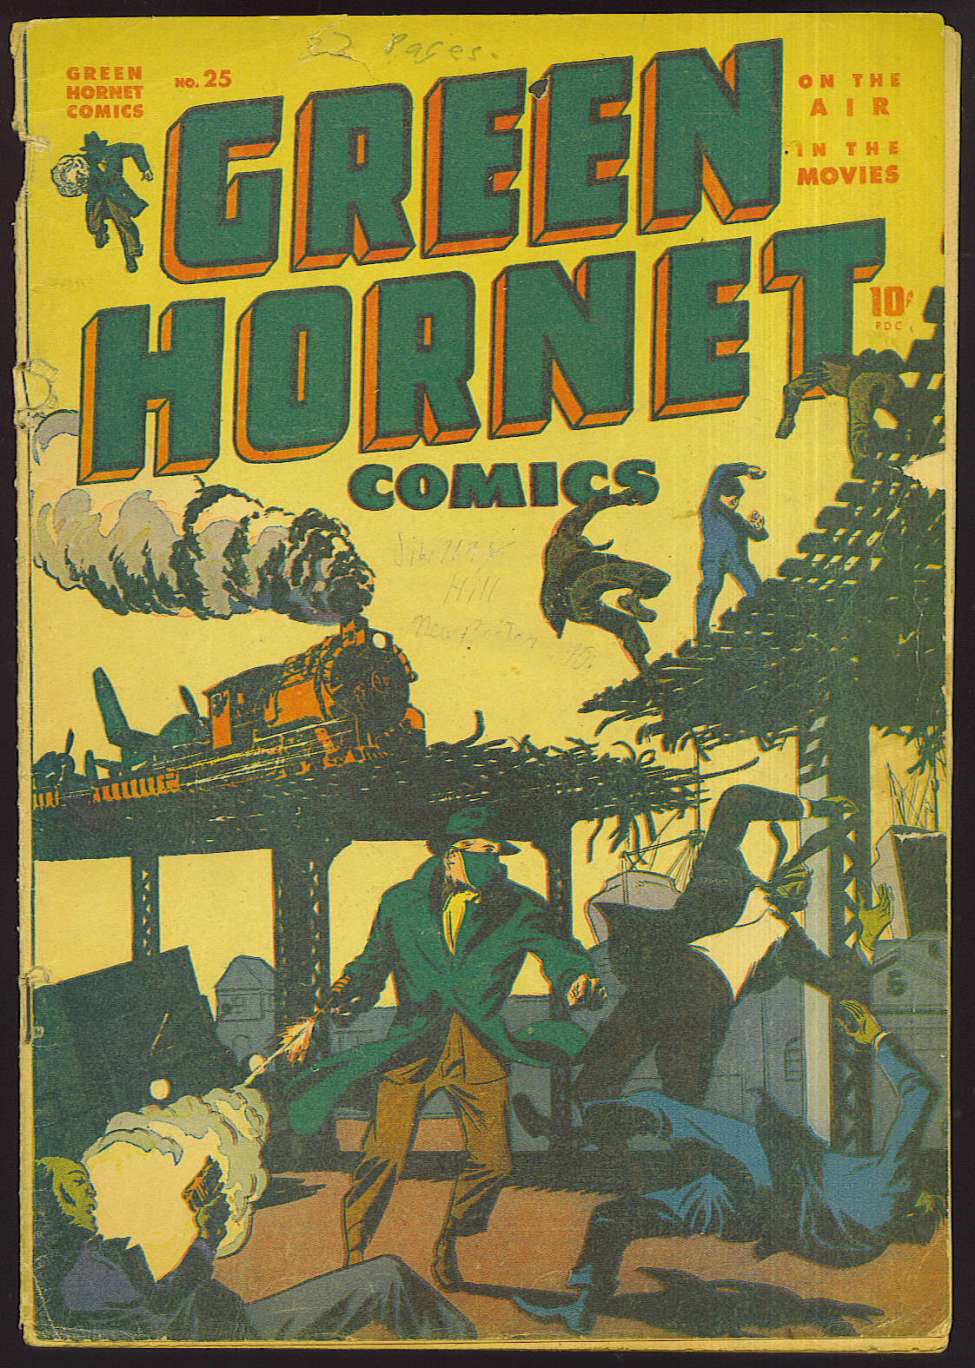 Comic Book Cover For Green Hornet Comics 25